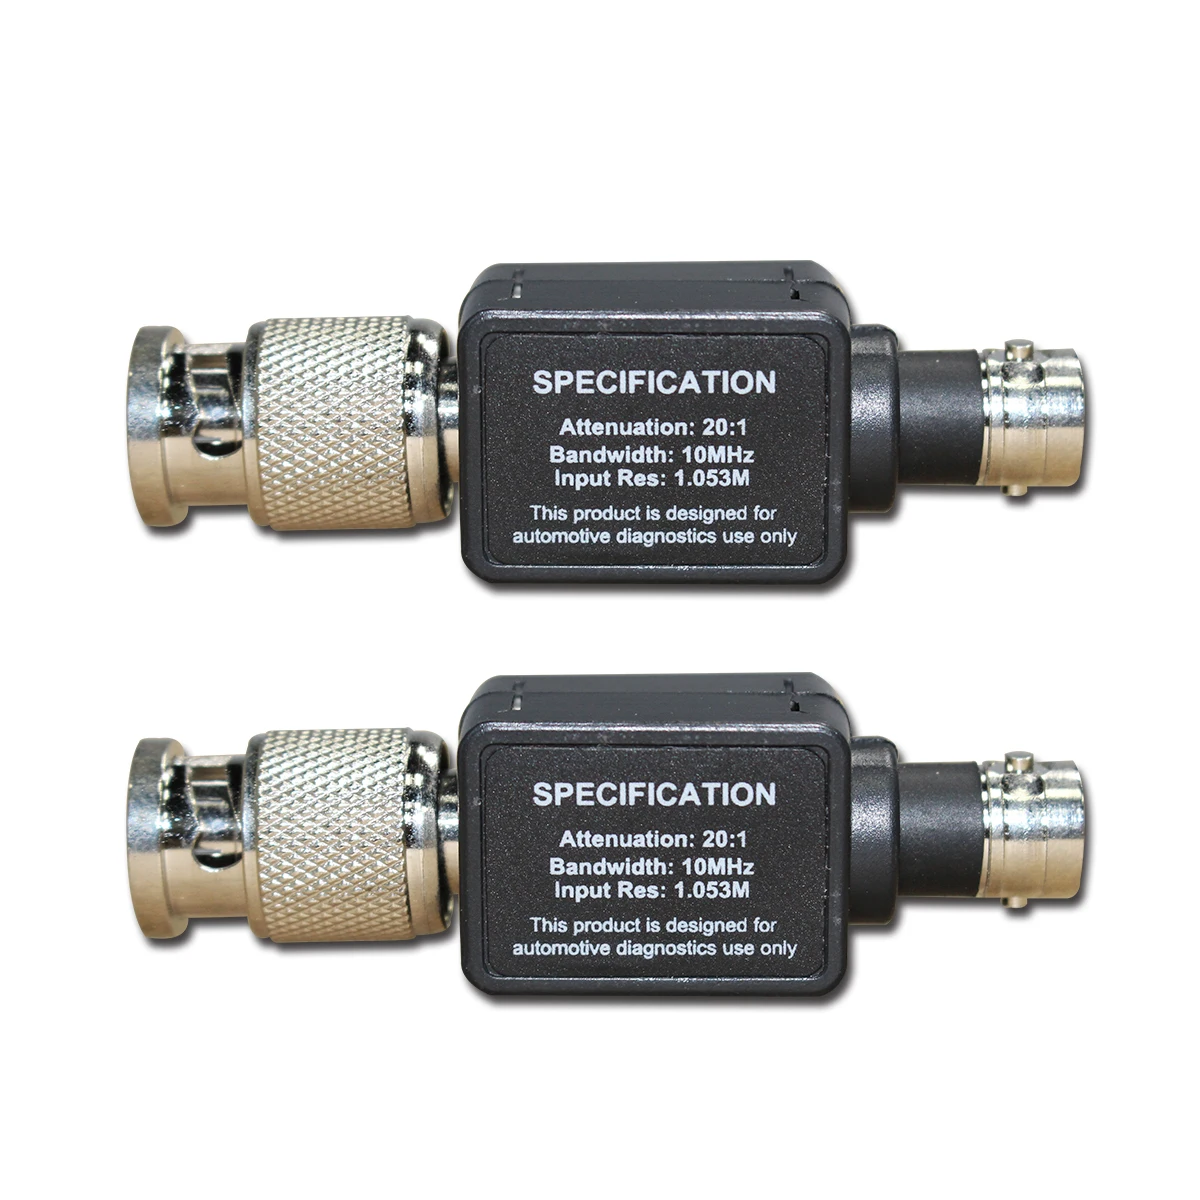 2pcs/lot Hantek Attenuator 1008C Oscilloscope Signal passive Attenuator HT201 20:1 Passive Attenuator 300V Max For Pico